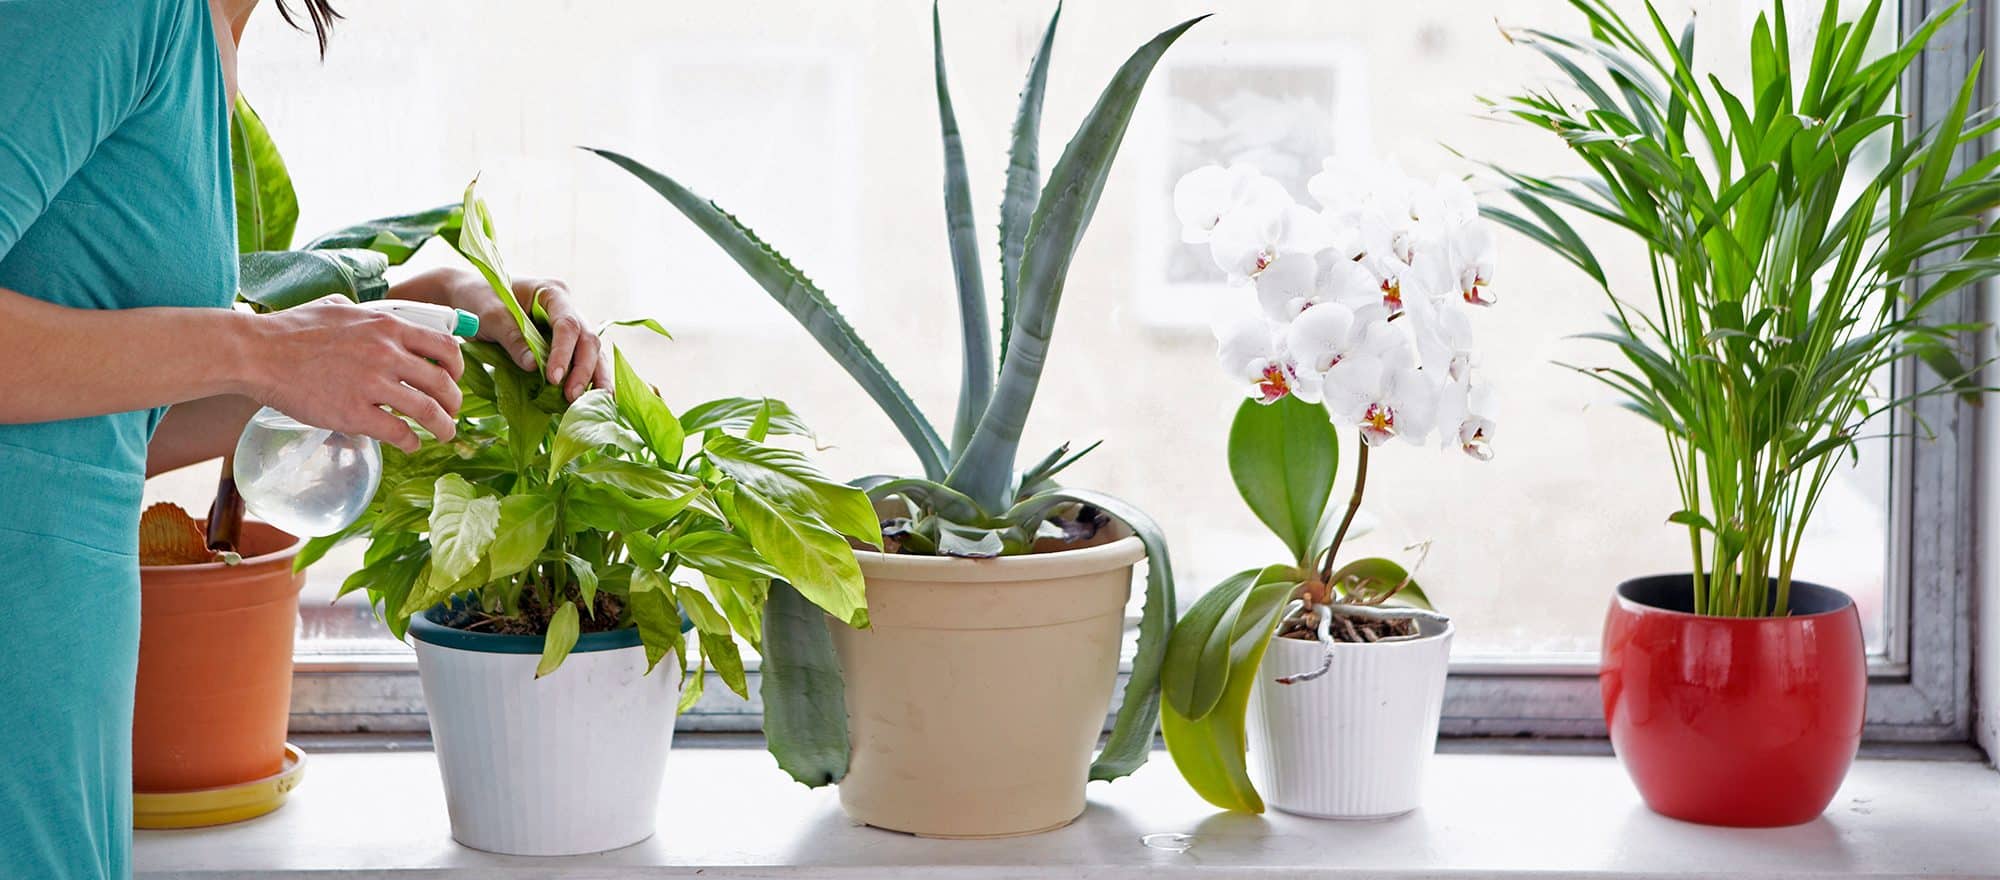 urban indoor plants e1477058232880 هل يمكن للنباتات المنزلية أن تكون مؤذية للبشر؟ مجلة نقطة العلمية